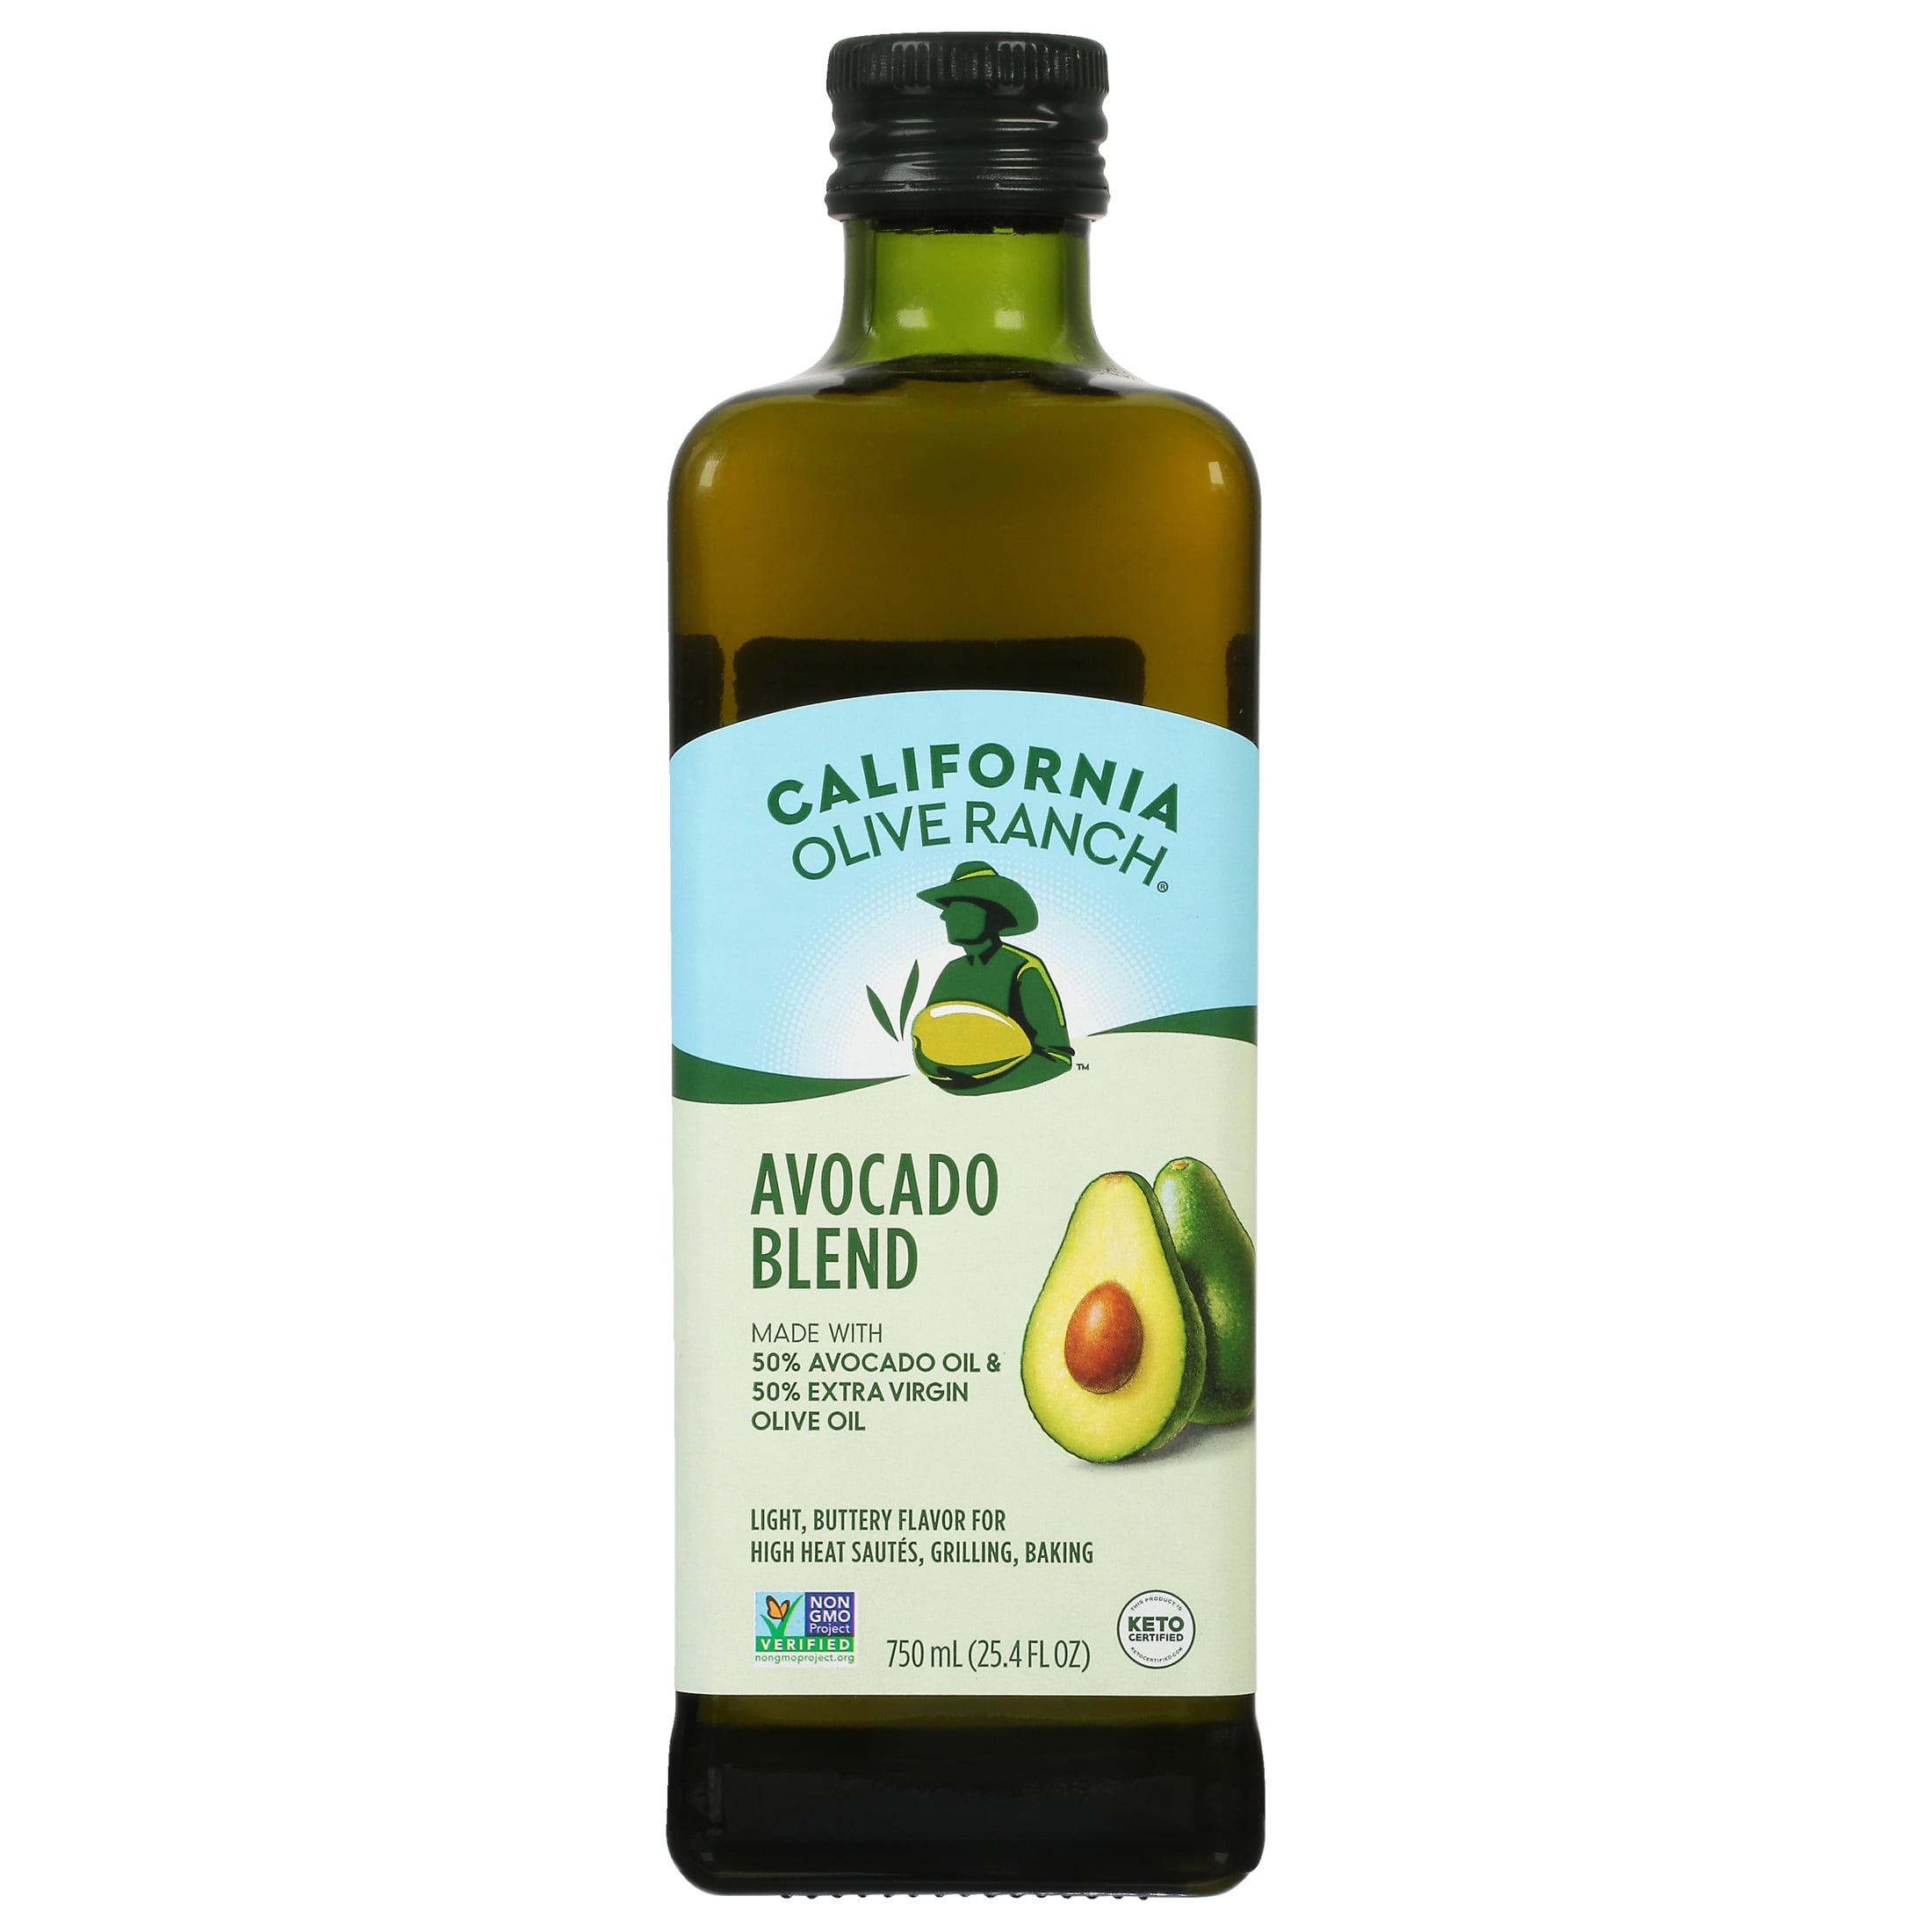 California Olive Ranch Avocado Blend Extra Virgin Olive Oil, 25.4 fl oz